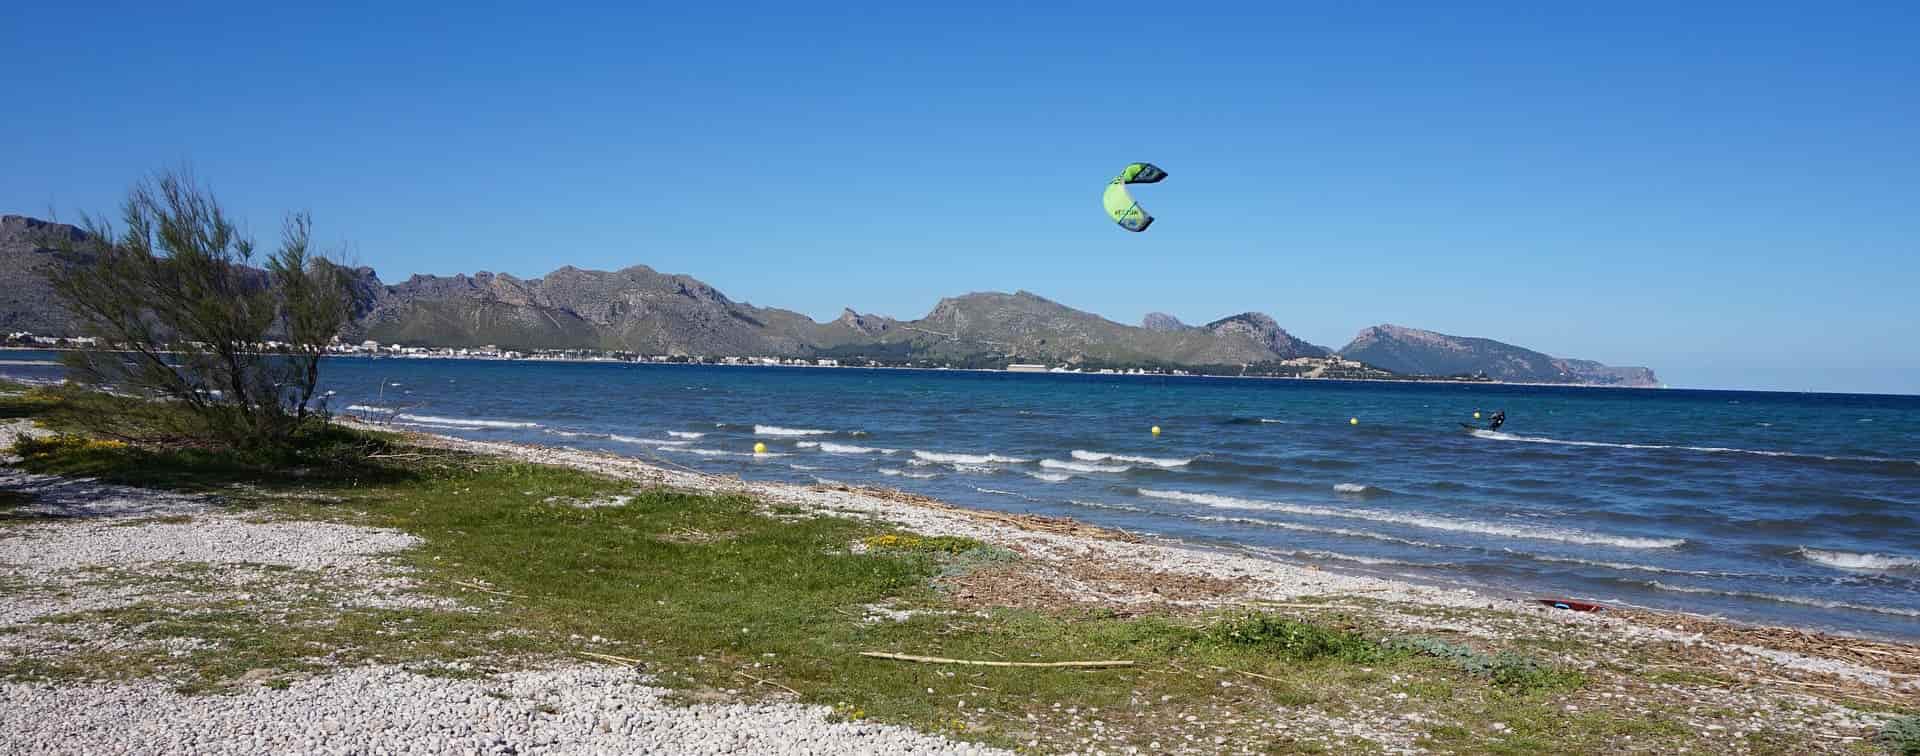 Kitesurfer flying in Playa de Llenaire (Puerto de Pollensa)